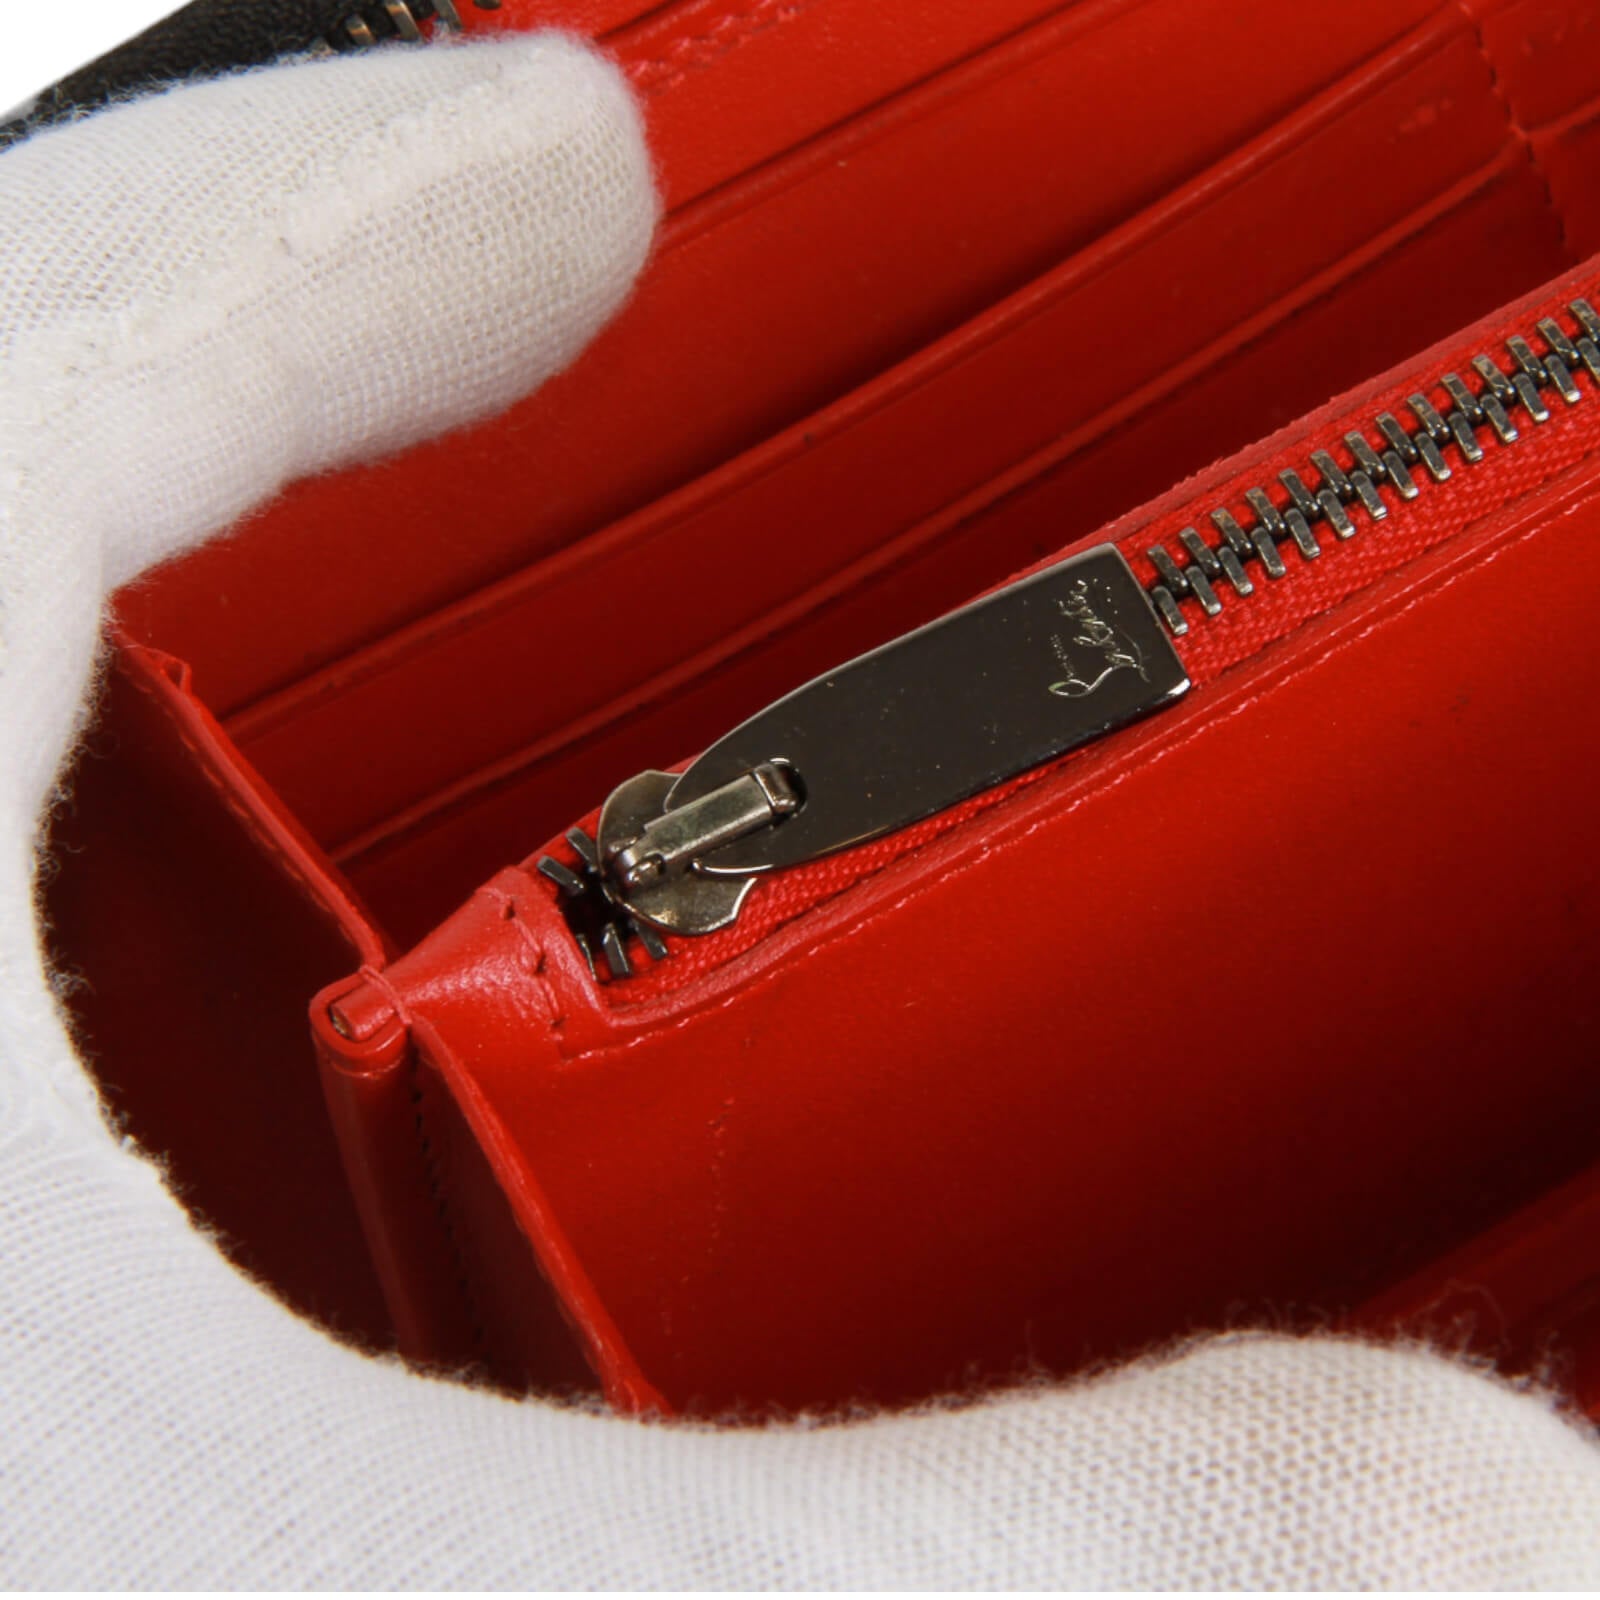 Christian Louboutin Black Panettone Wallet Spike Leather Zippy Wall1et CL82K